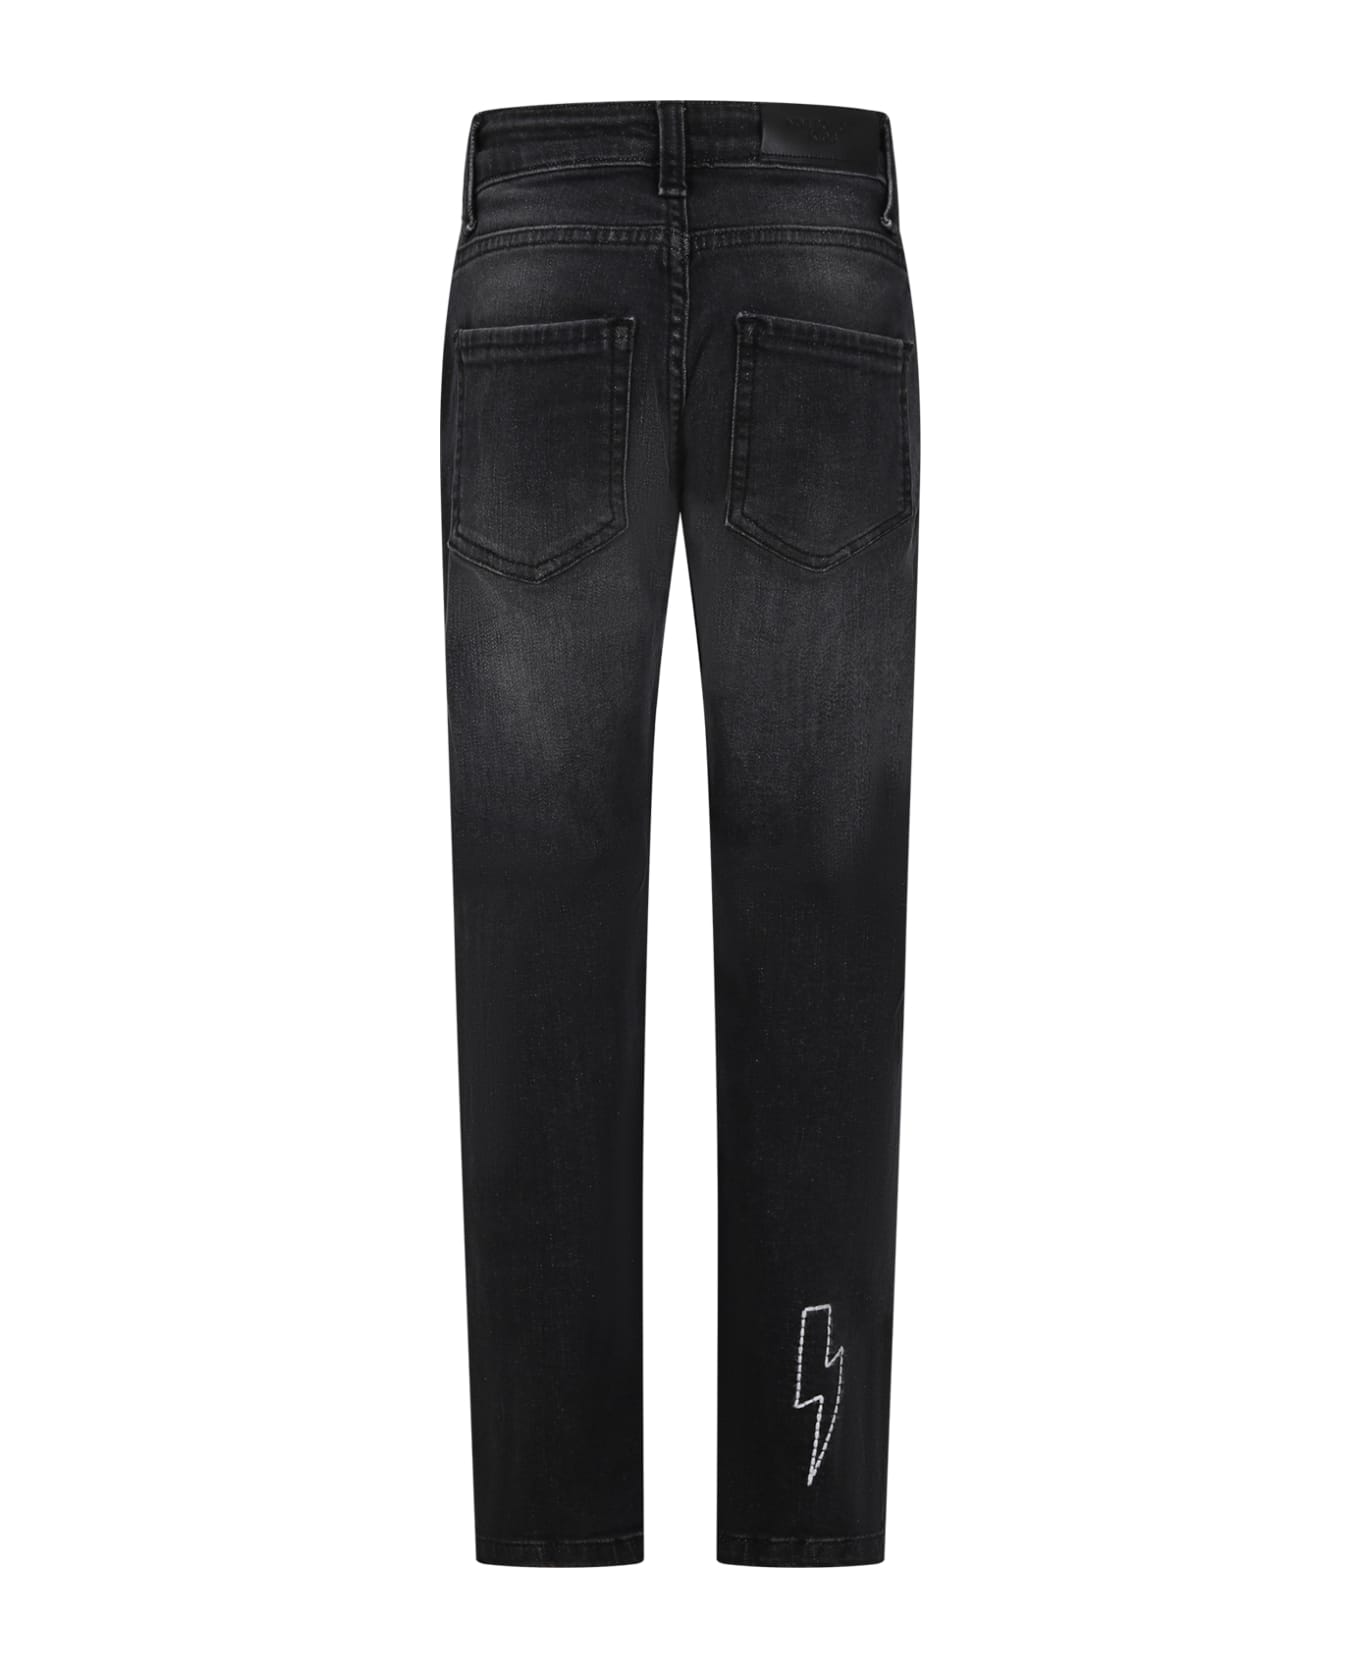 Neil Barrett Black Jeans For Boy With Logo - Denim ボトムス